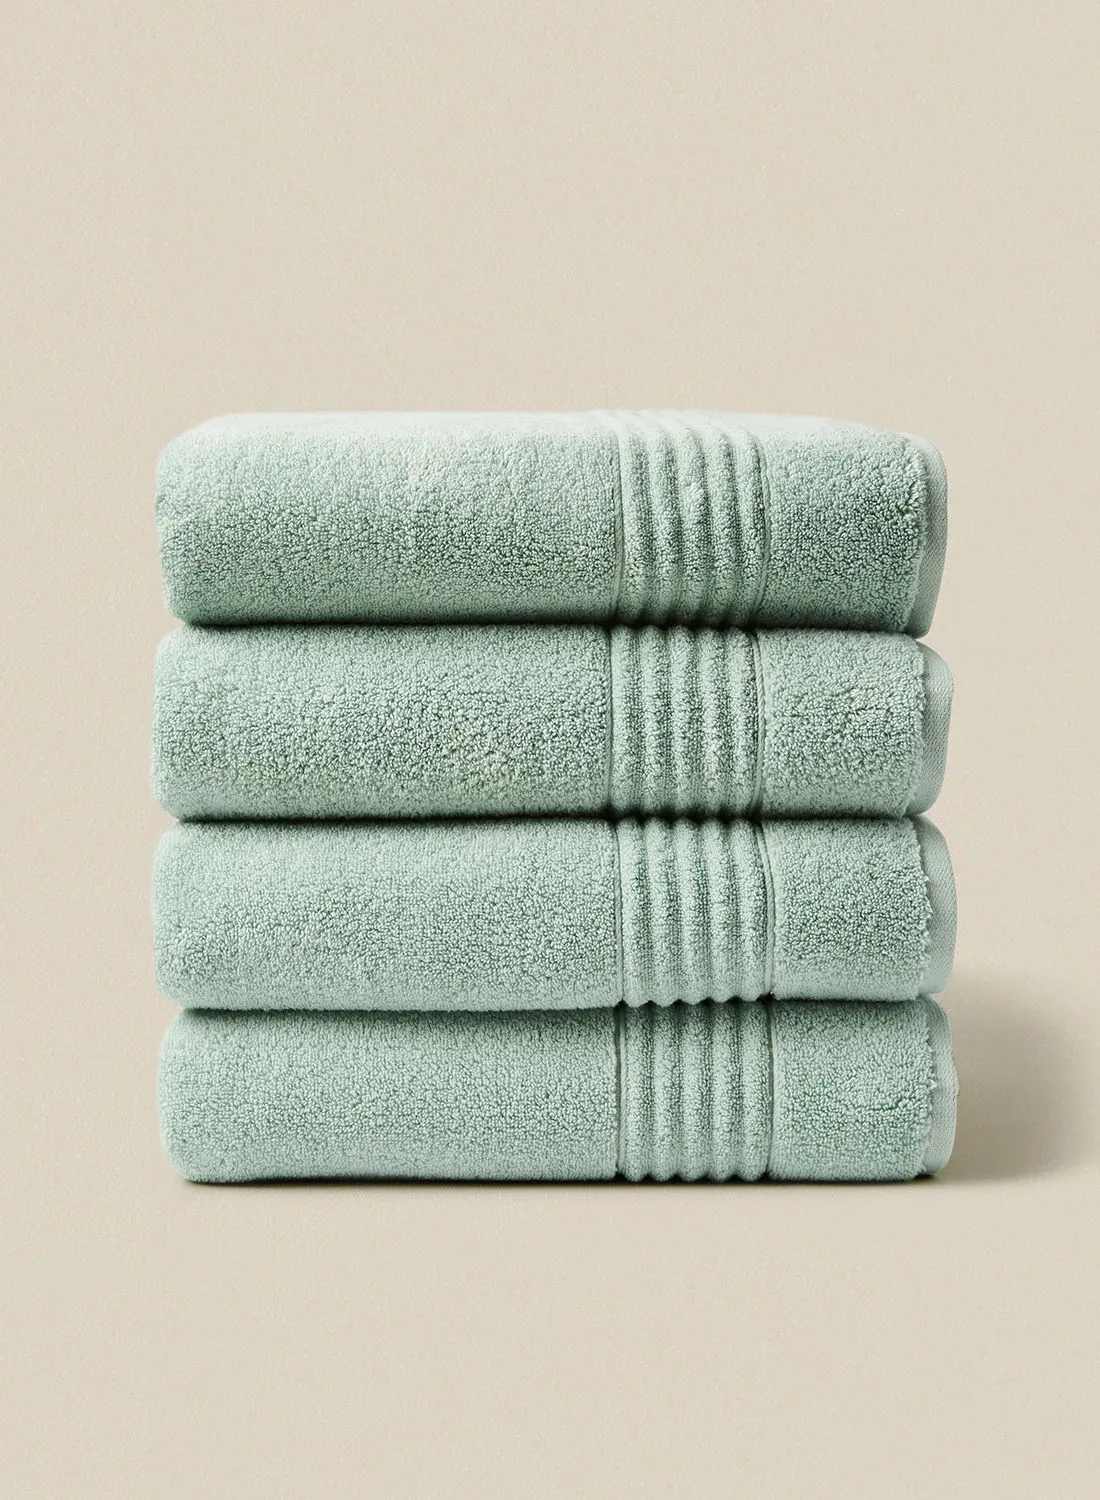 noon east 4 Piece Bathroom Towel Set - 500 GSM 100% Cotton - 4 Bath Towel - Multicolor Blue_Aqua Color - Highly Absorbent - Fast Dry